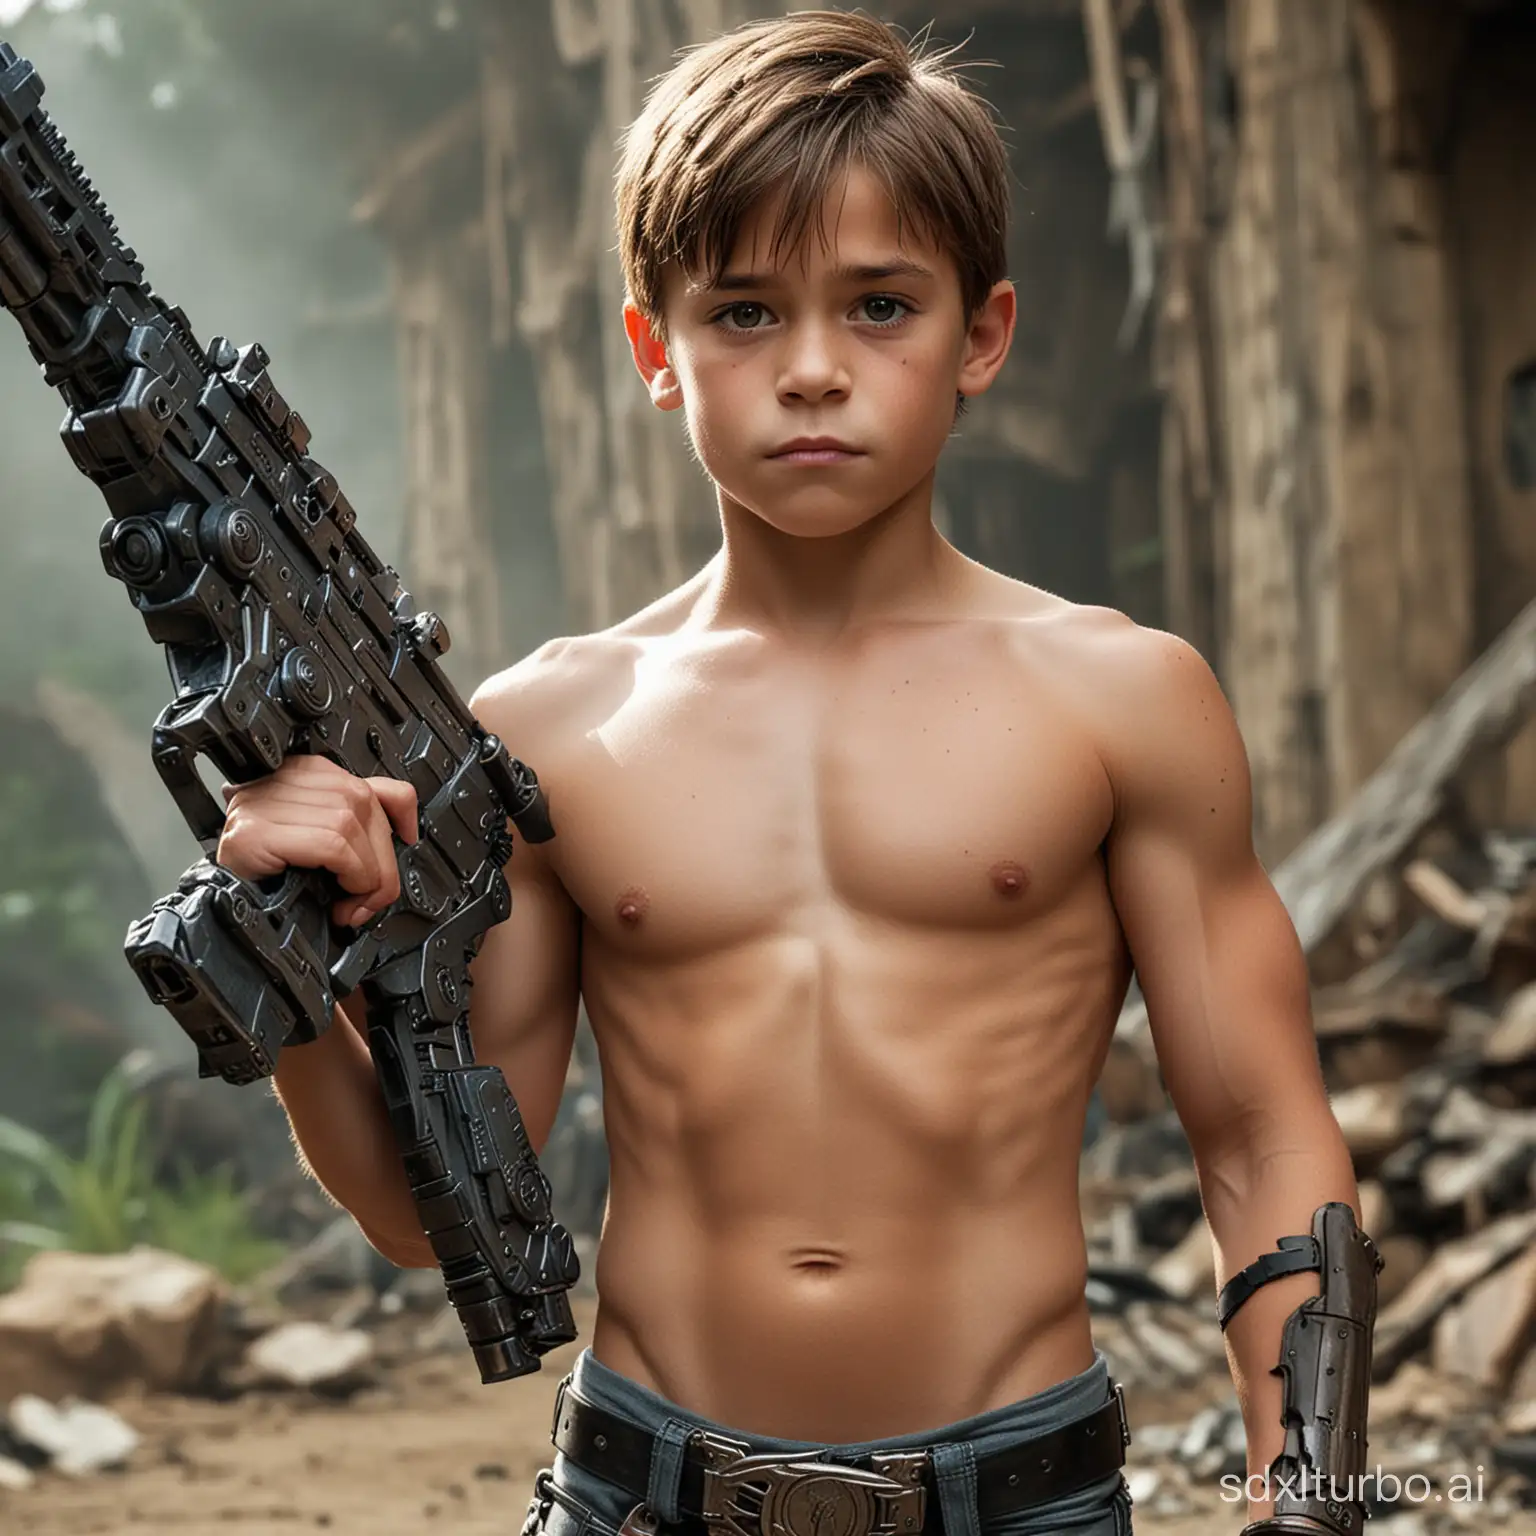 Muscular-Shirtless-12YearOld-Boy-with-Gun-in-Apocalyptic-World